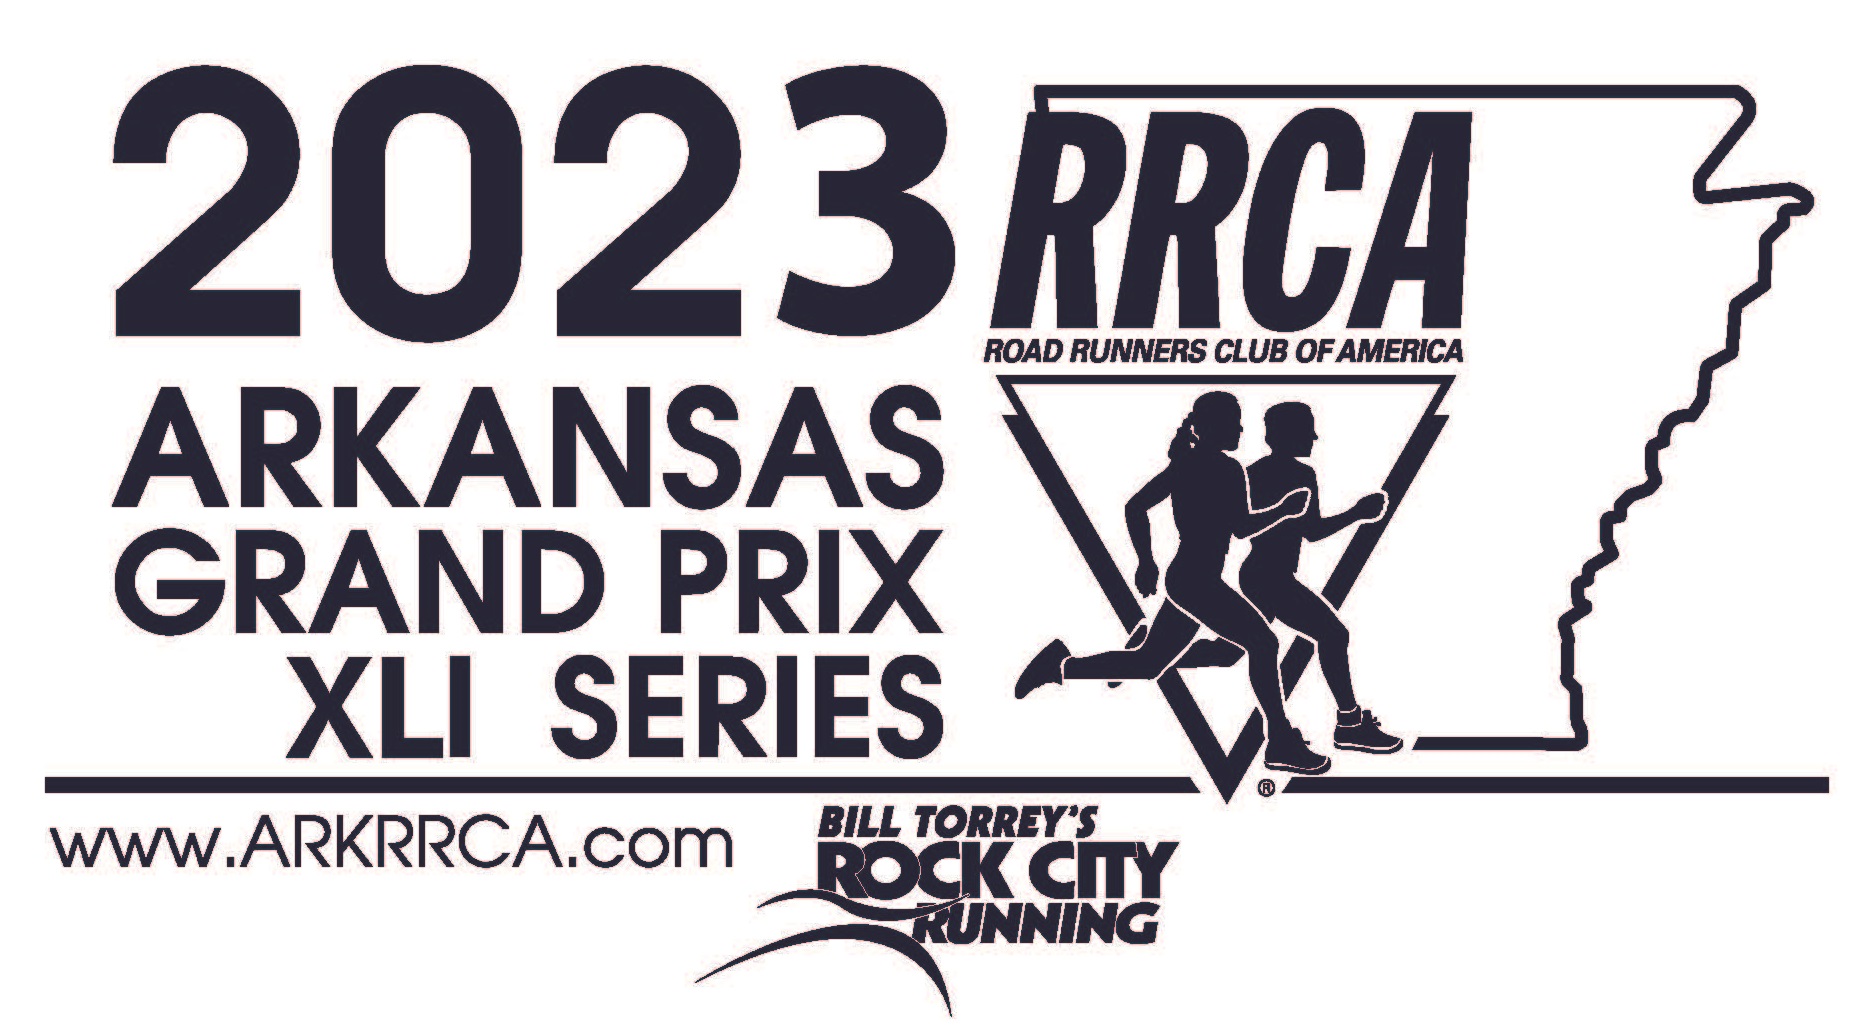 Arkansas RRCA and Grand Prix